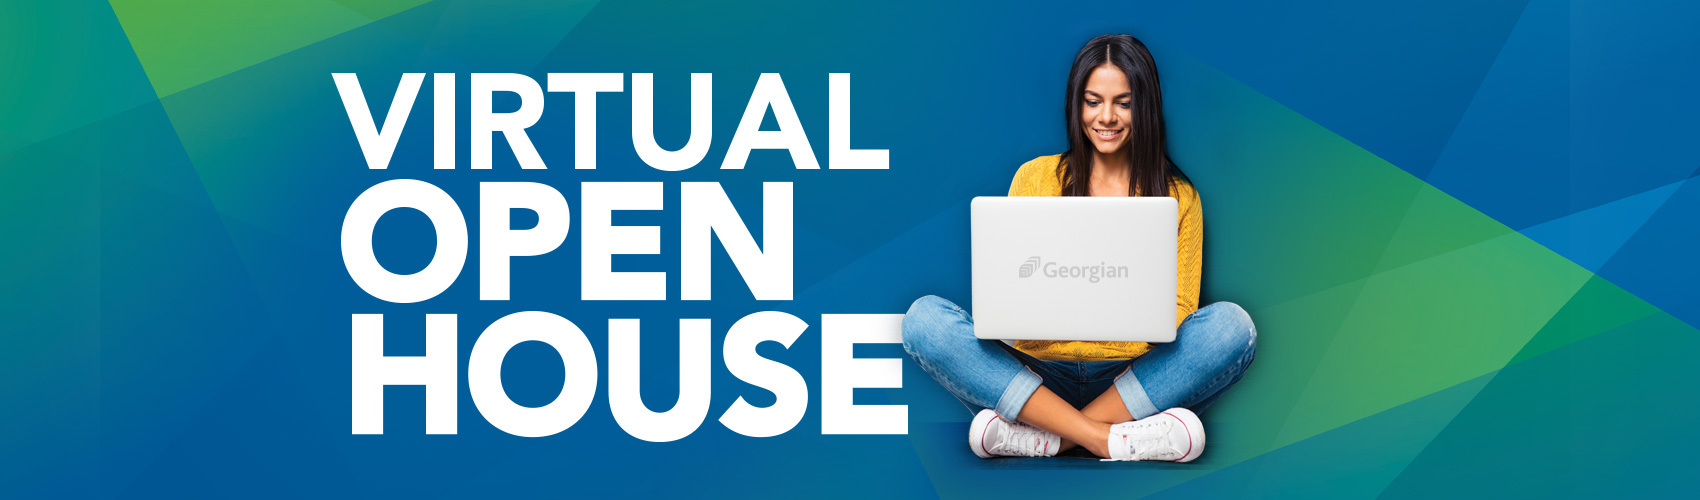 СŶƵ's Virtual Open House, featuring a female student sitting cross-legged using a laptop